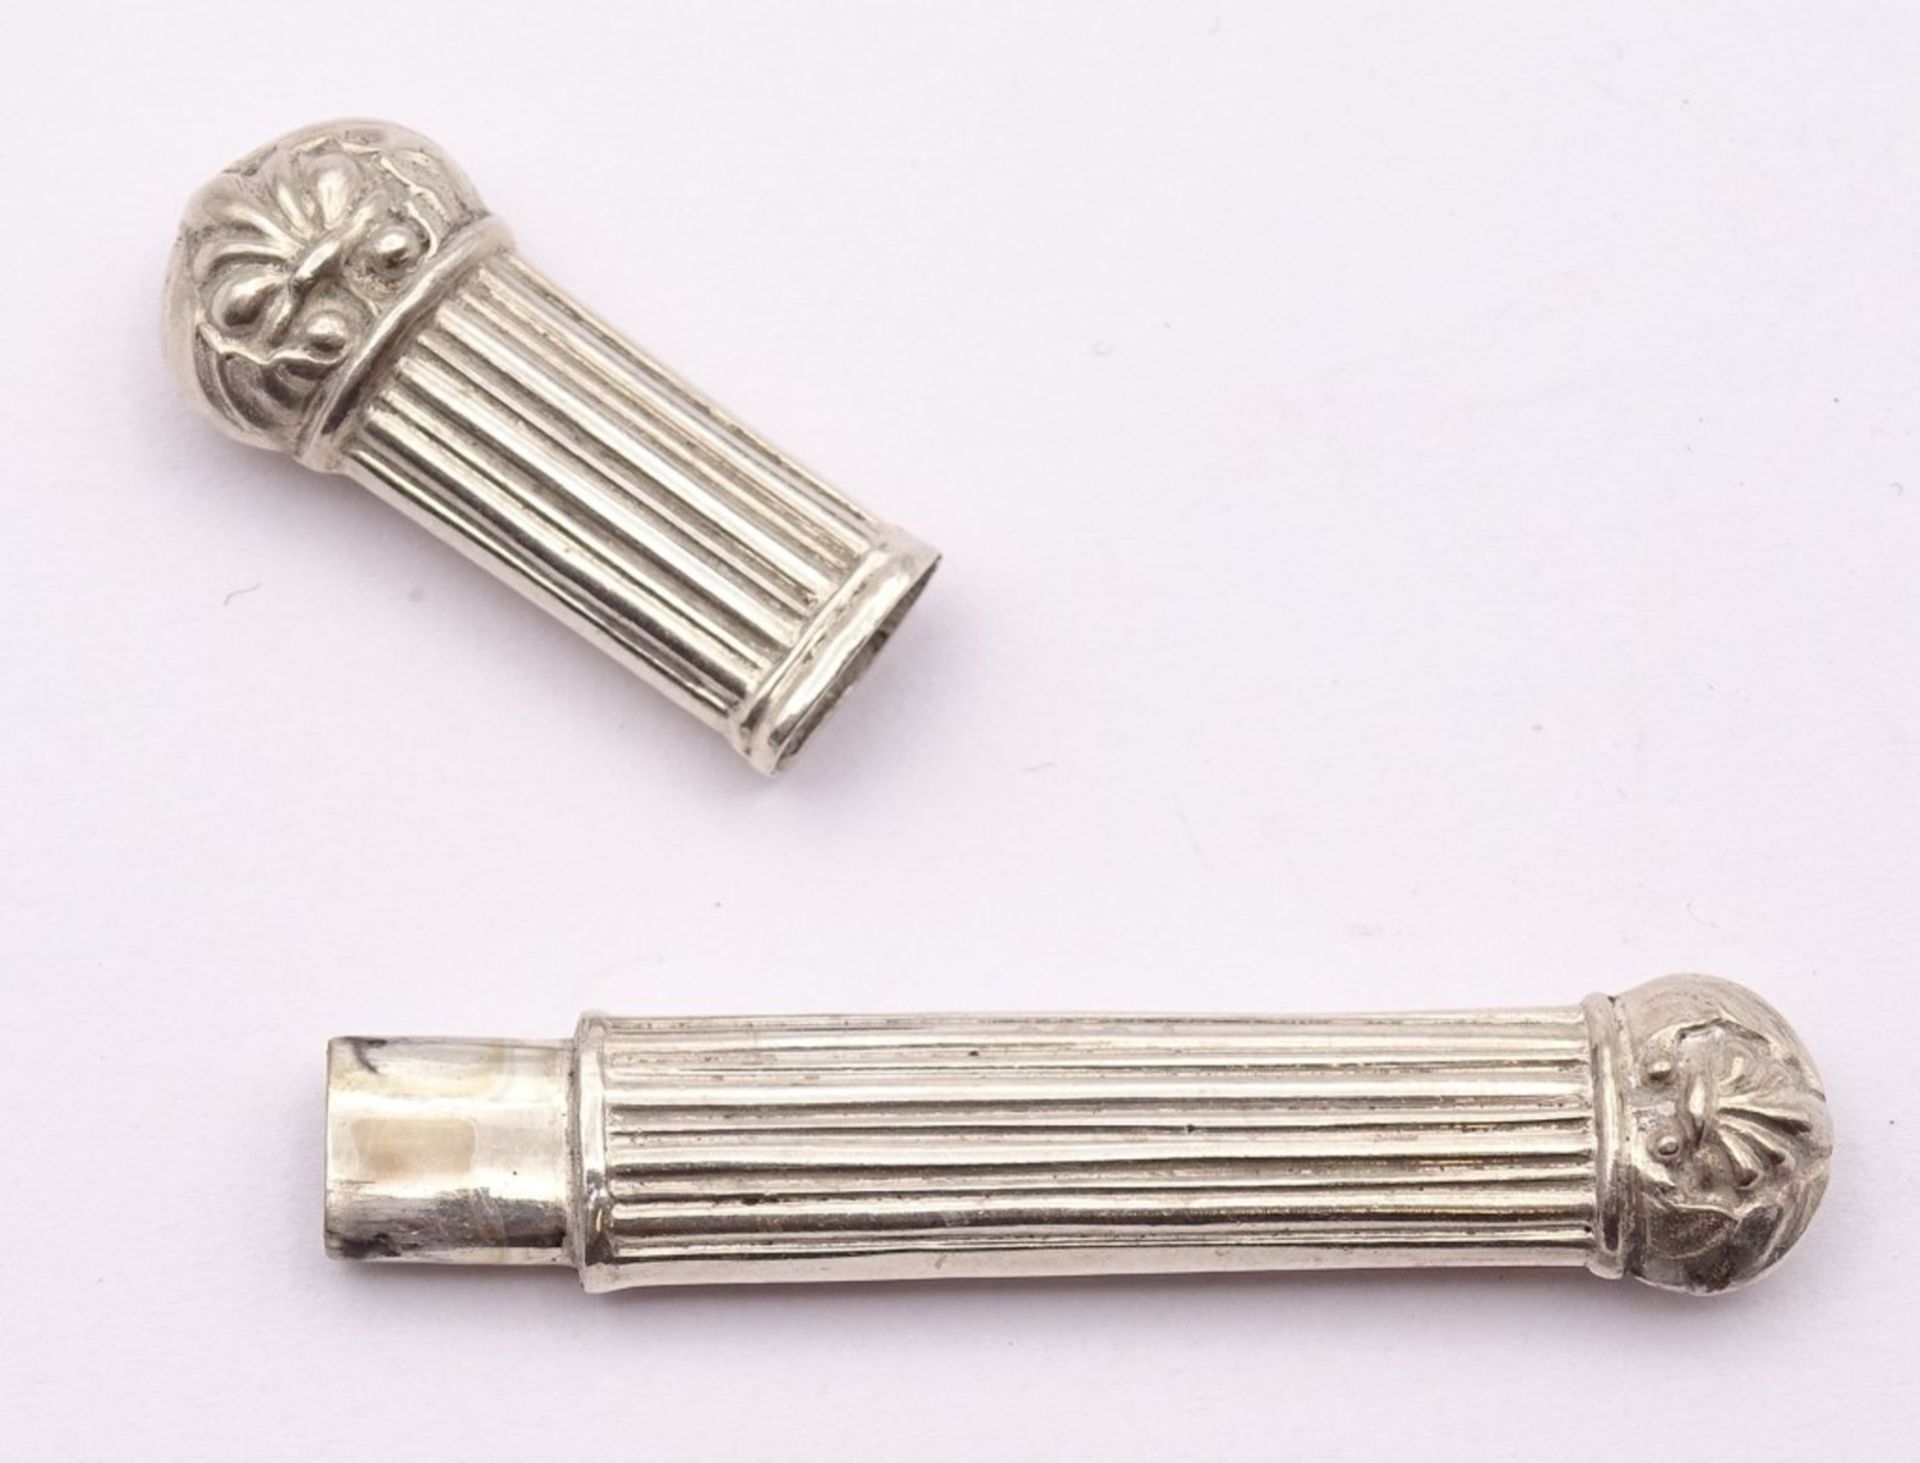 Nähnadel oder Zahnstocher Behälter,Silber, 7,2cm, 5,7 g. - Image 3 of 3